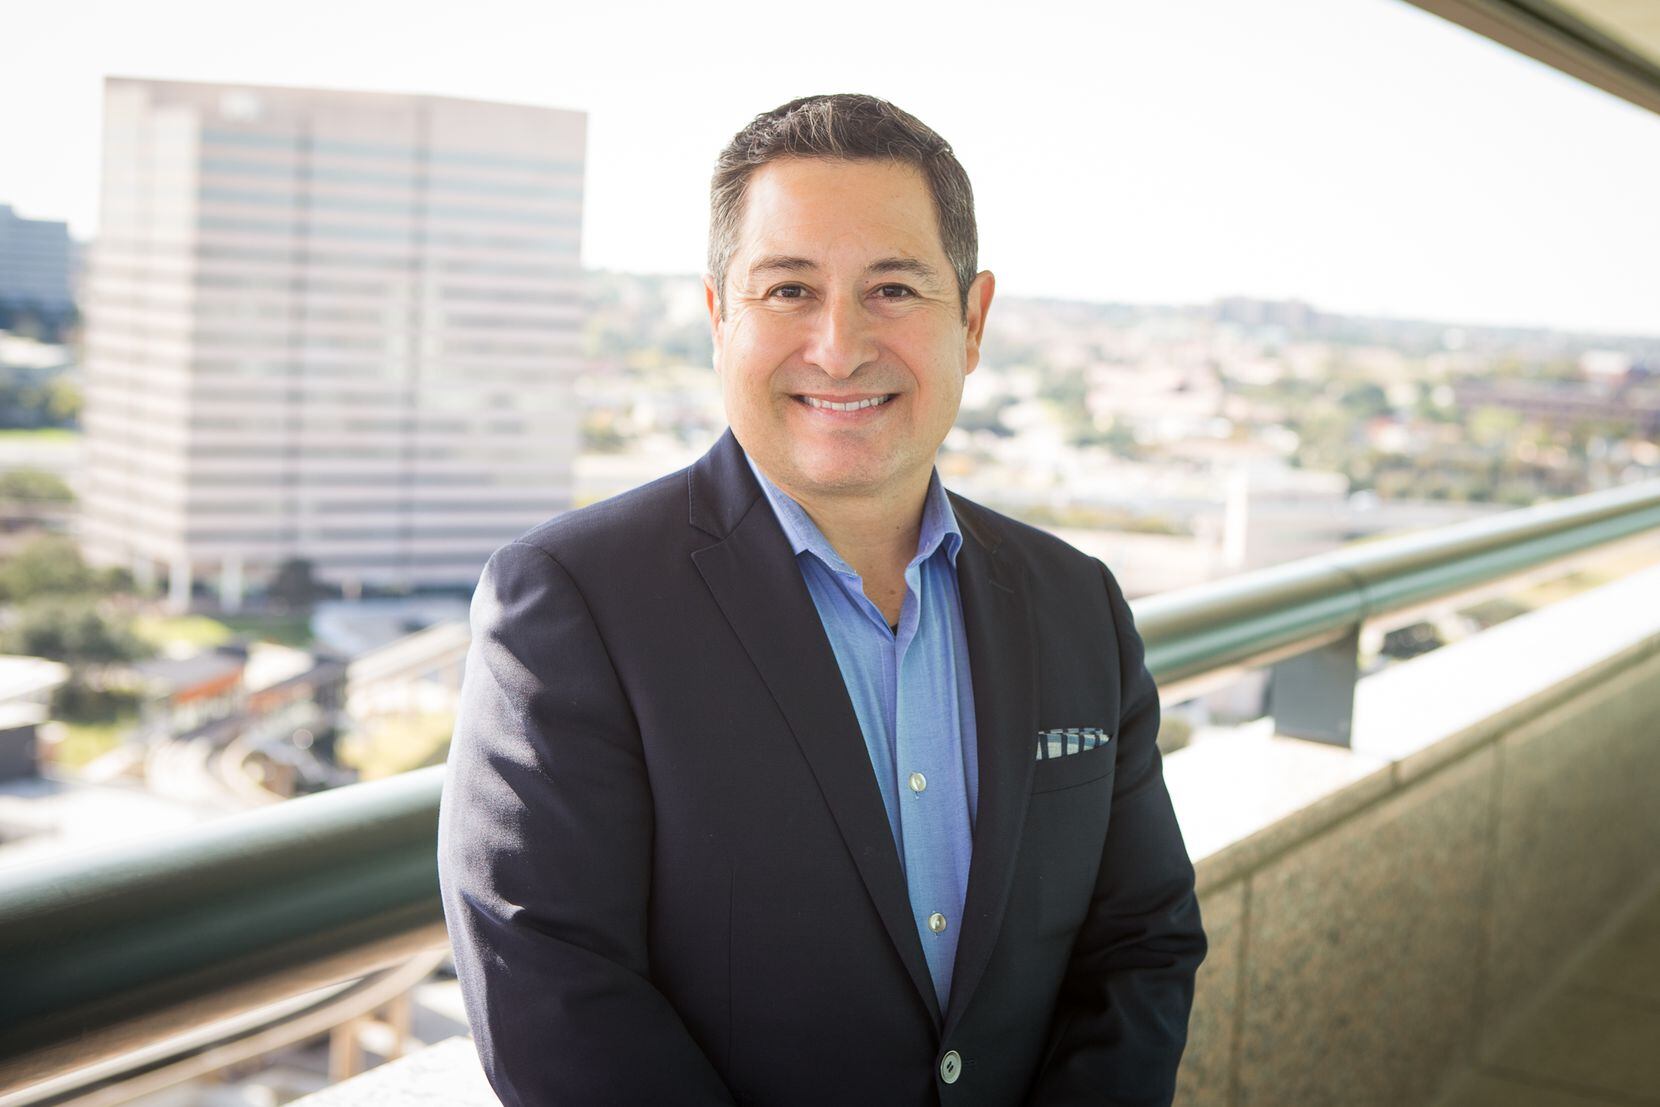 Jorge Corral, Dallas managing director of Accenture